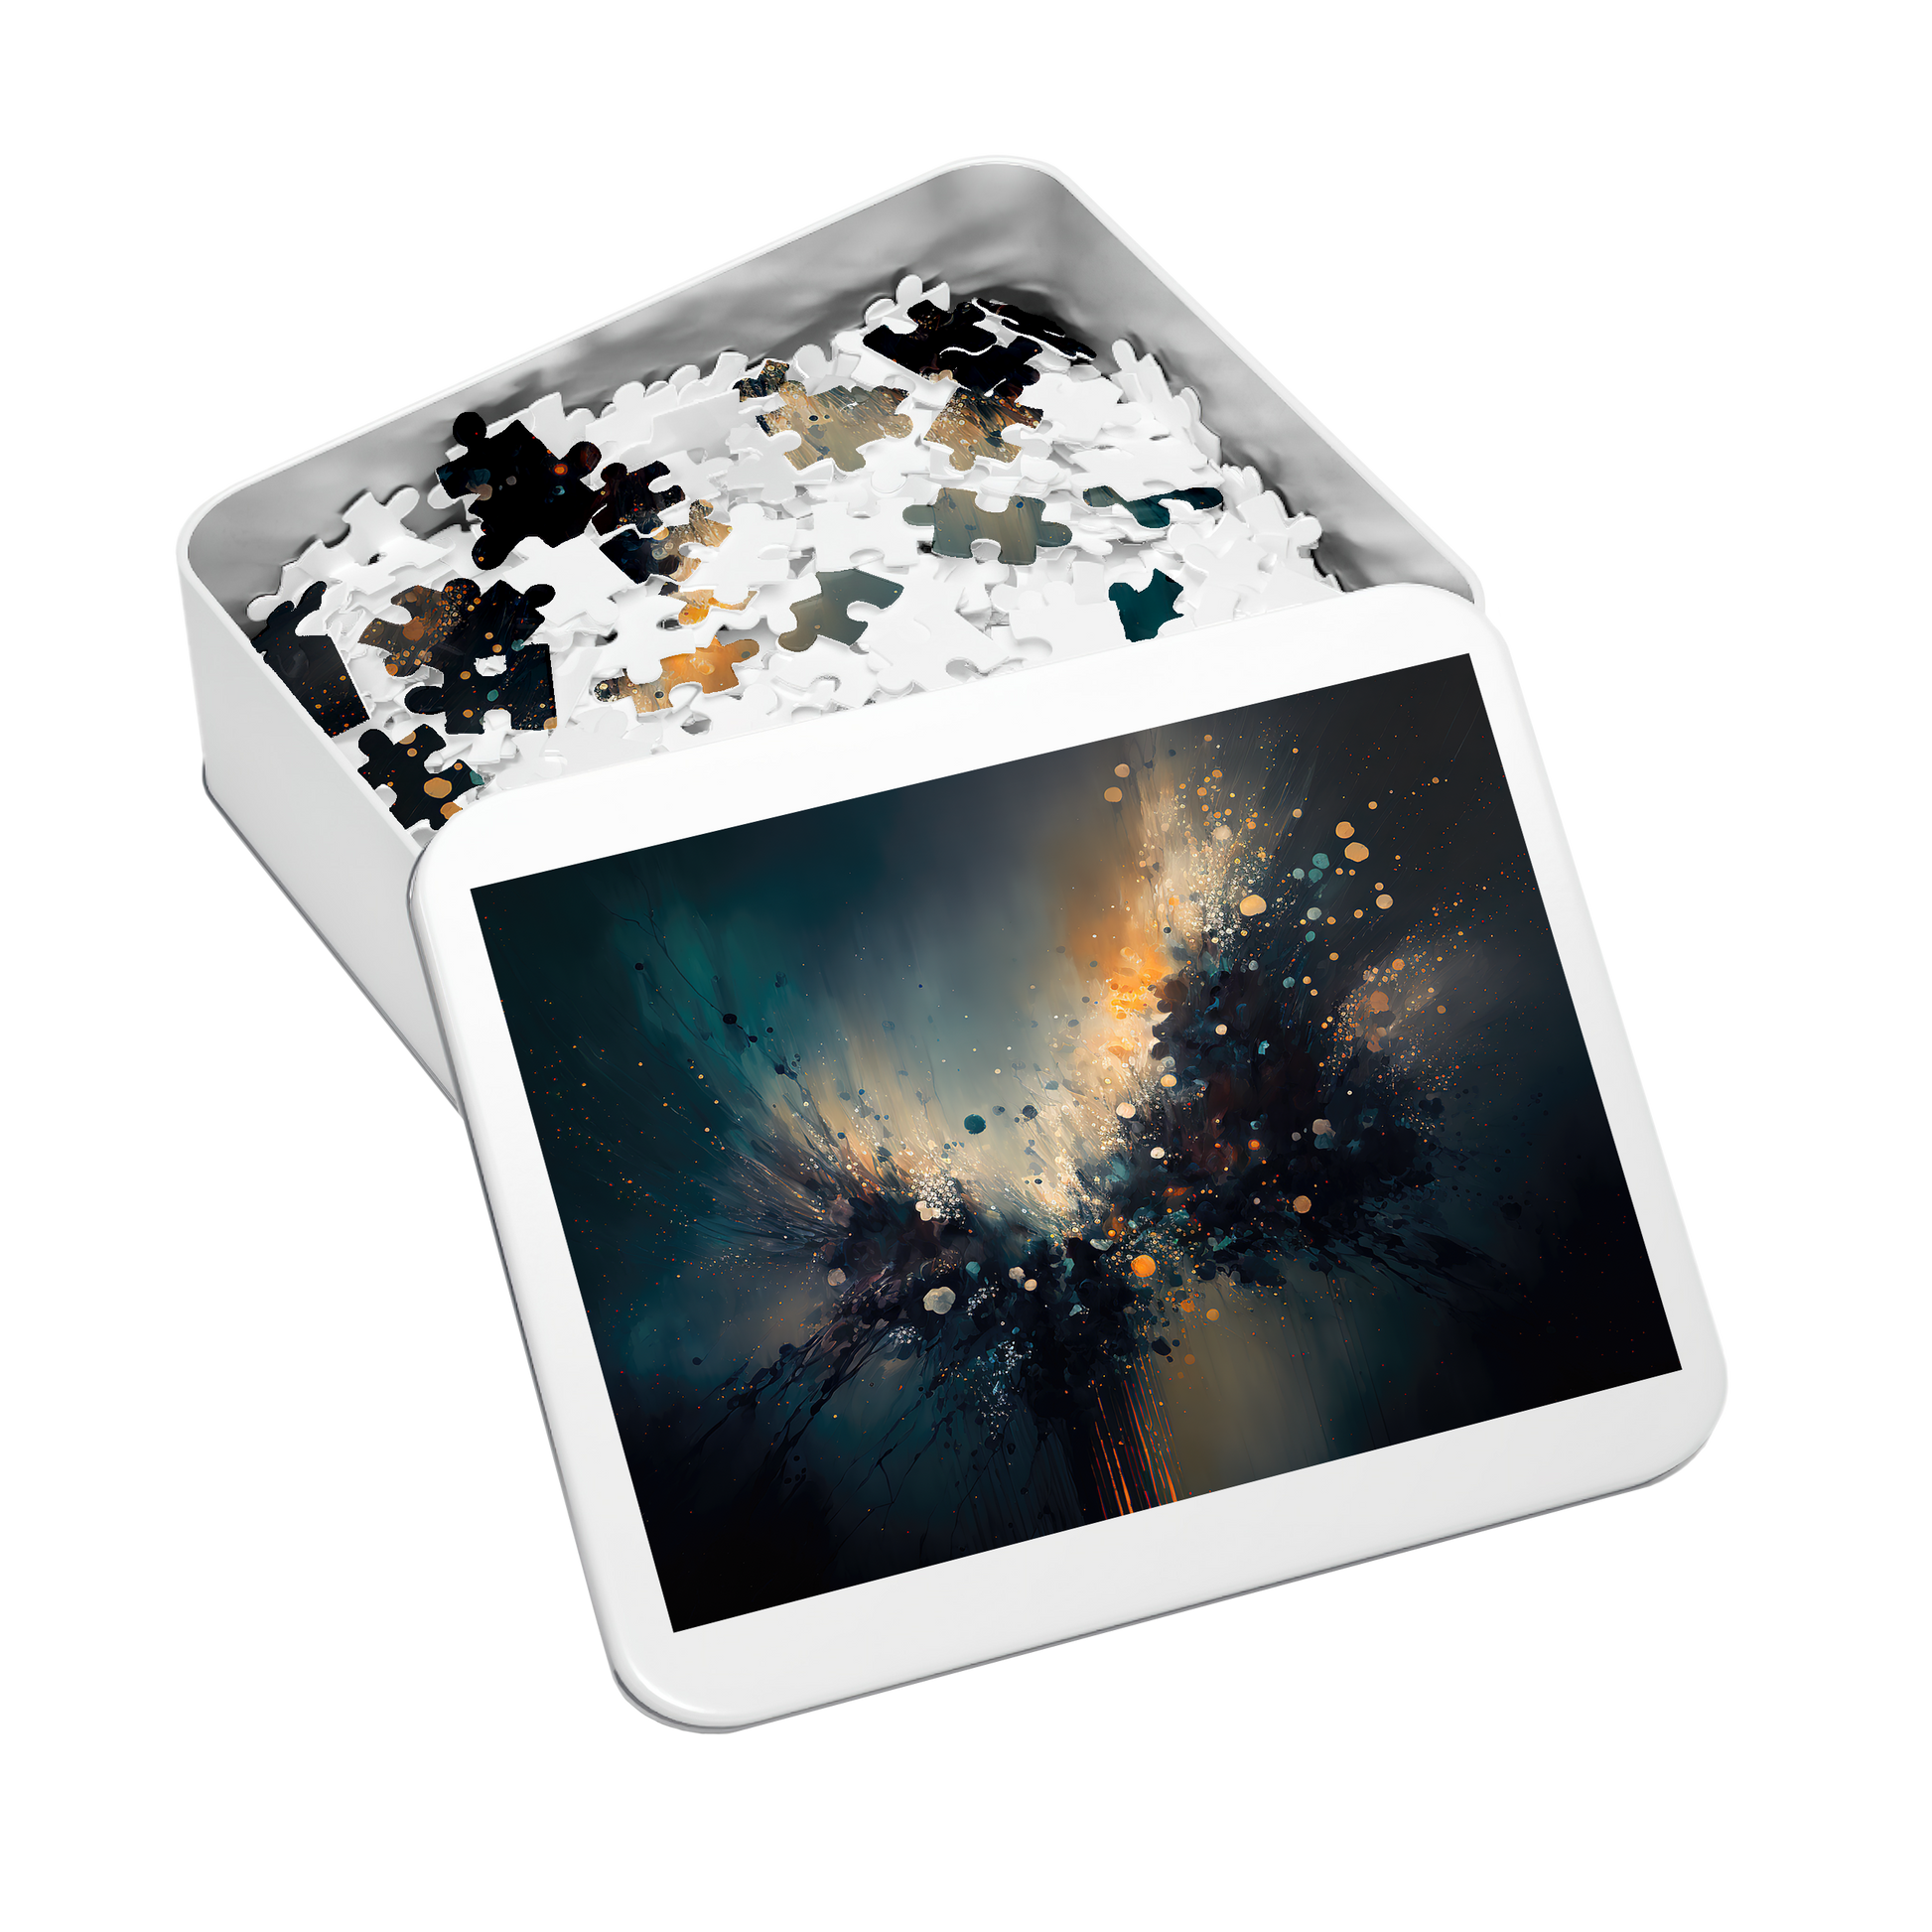 Starburst - Premium Jigsaw Puzzle - Celestial, Beautiful, Space Scape - Multiple Sizes Available